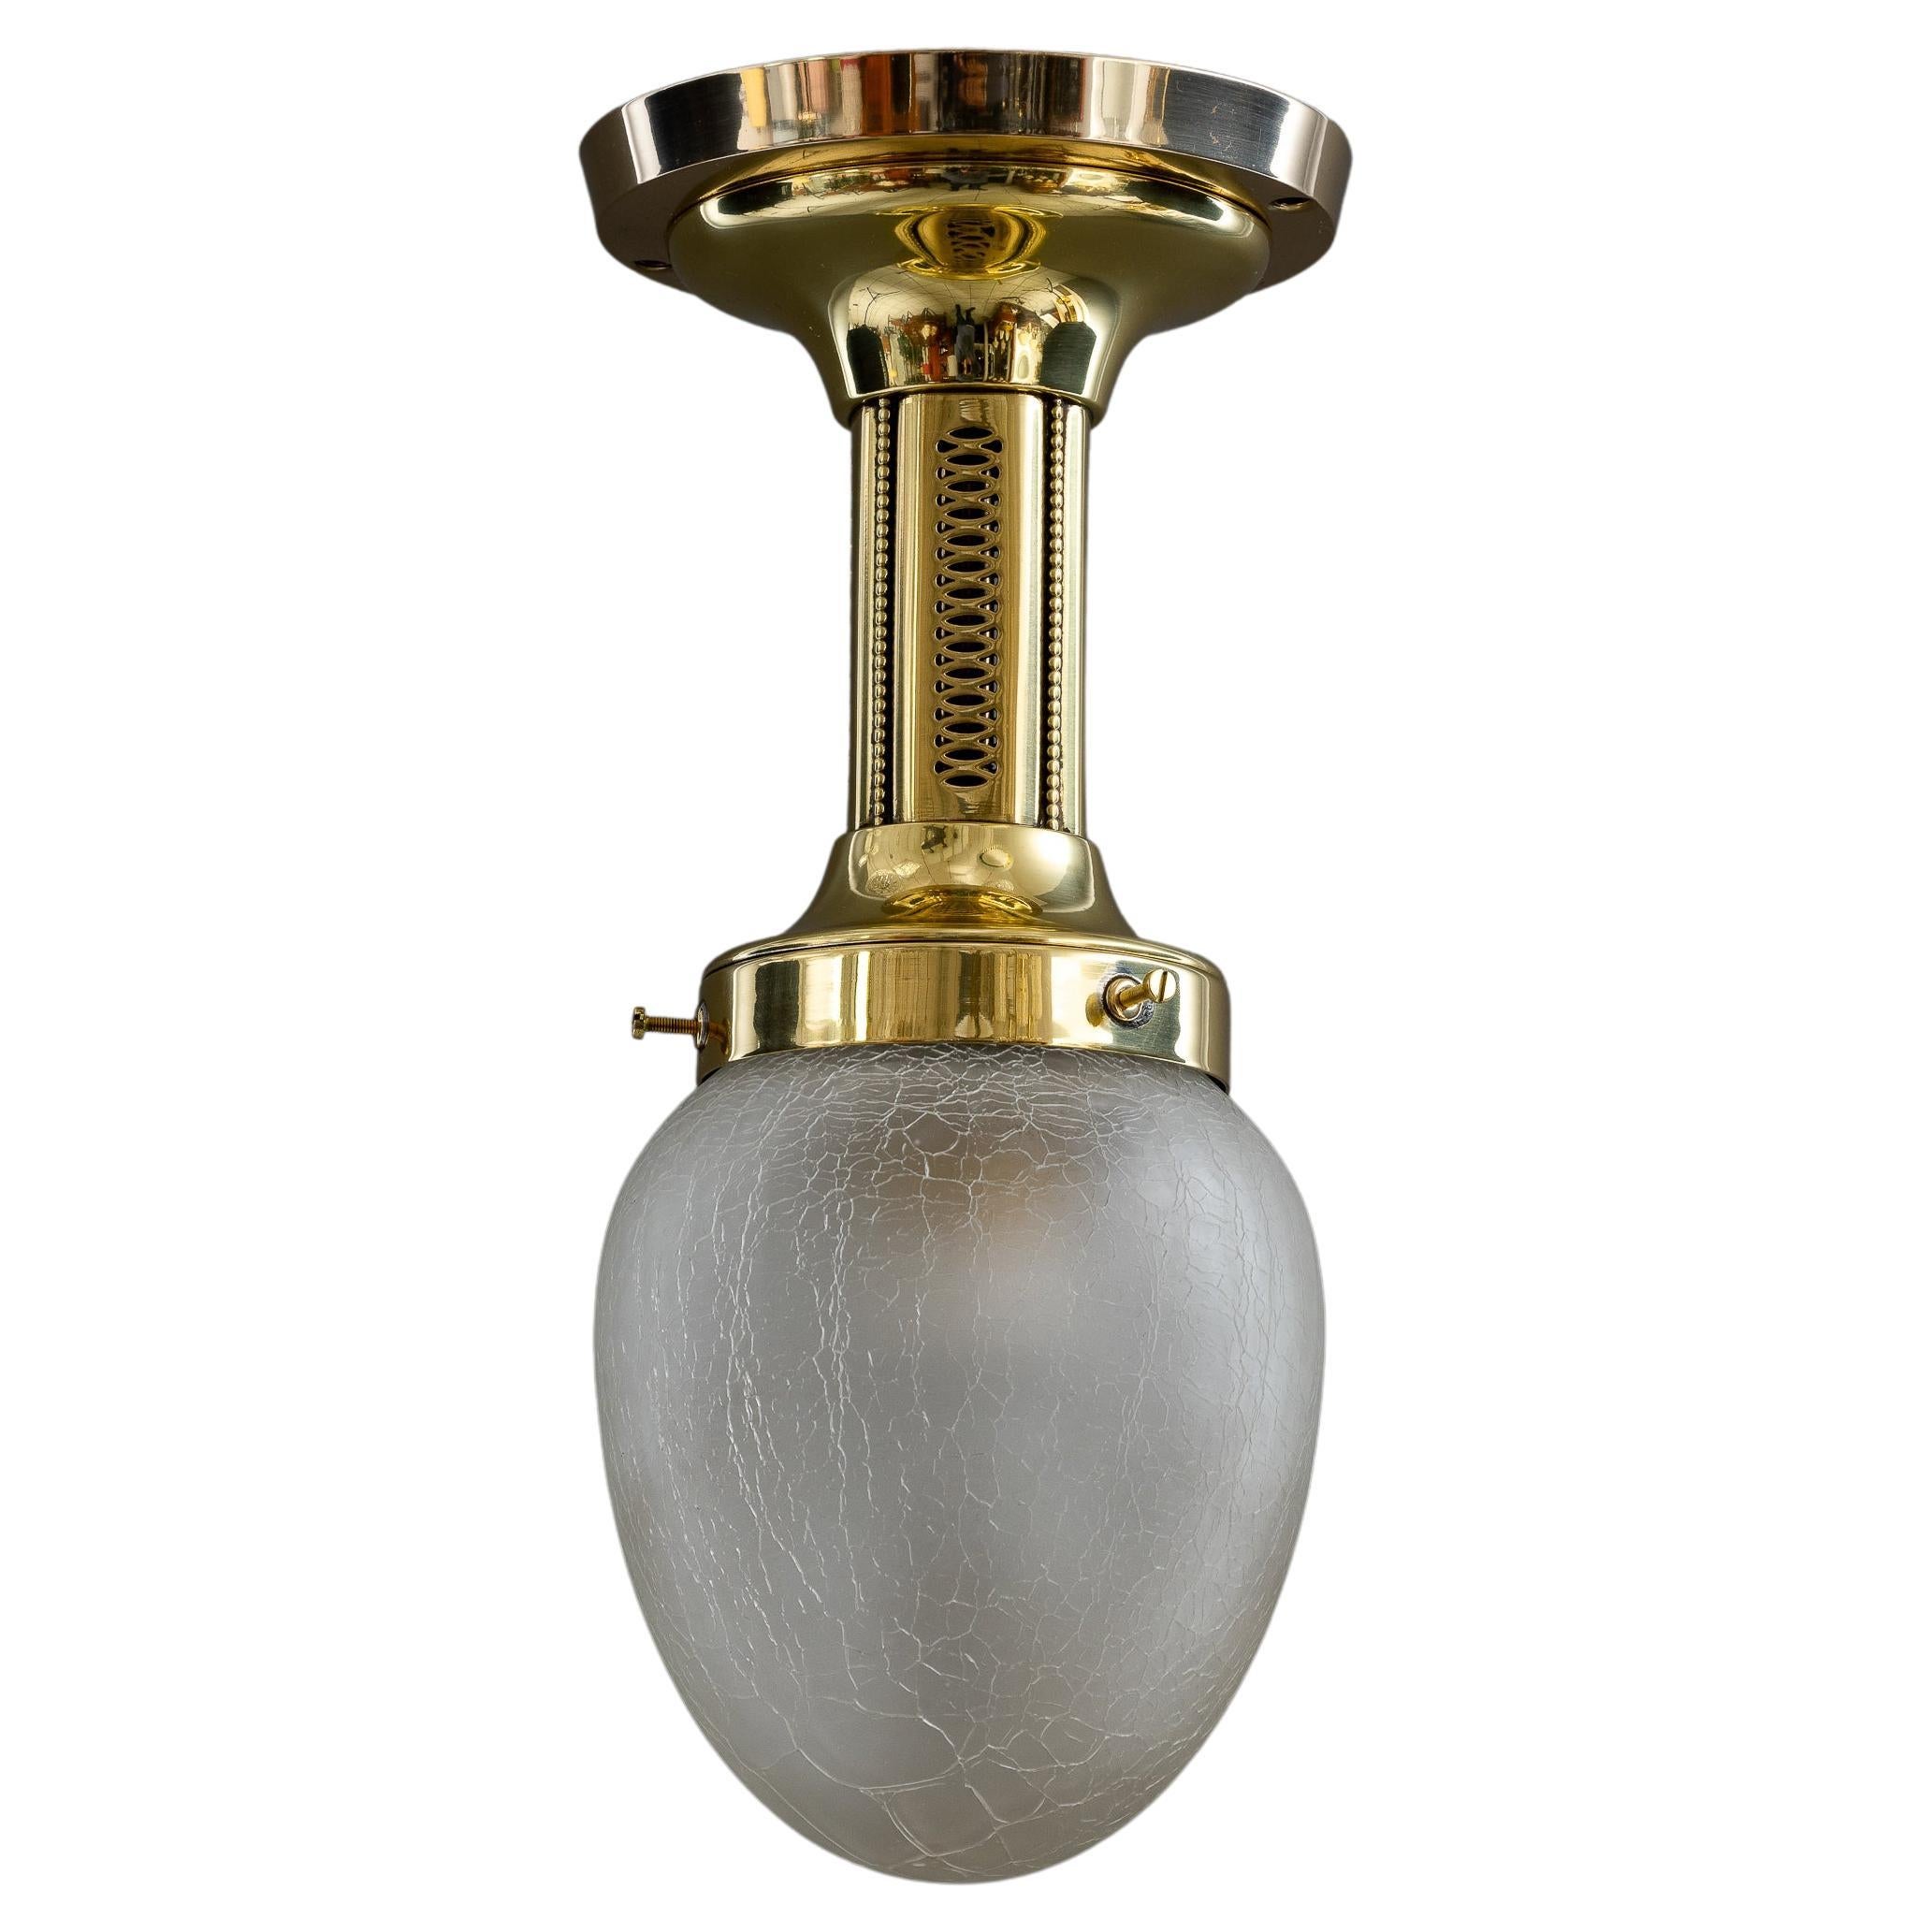 Art Deco Ceiling Lamp with Original Glass Shade Around 1920s